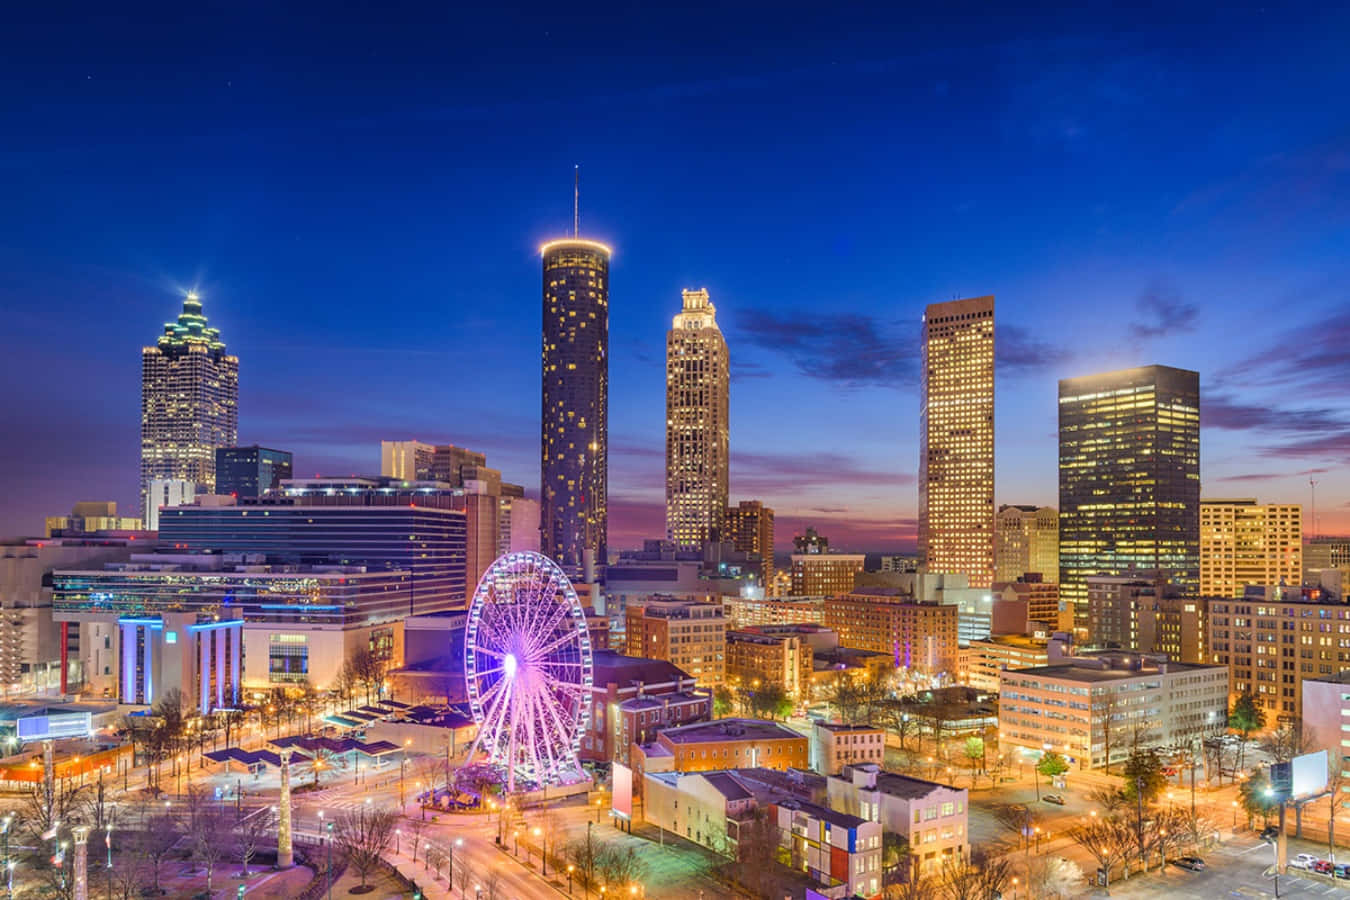 Atlanta Skyline At Night With Ferris Wheel